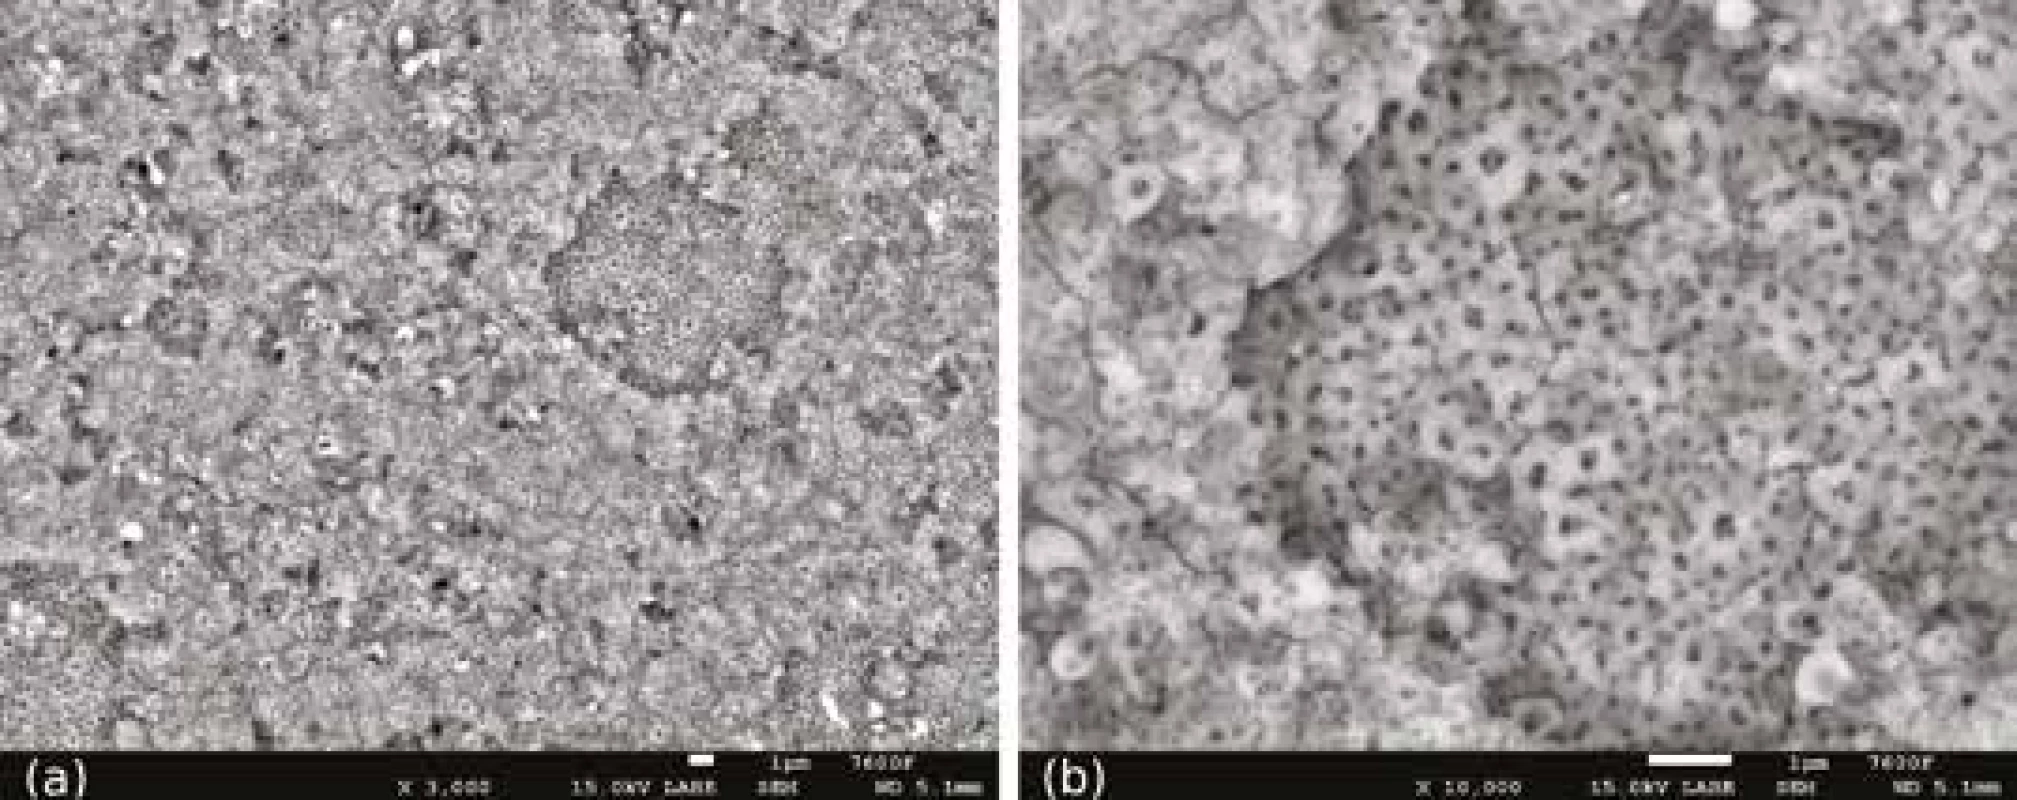 Anodizovaný povrch vzorků
z Ti6Al4V ELI, přehled (a)
a detail (b)<br>
Fig. 1
Surface of anodized
Ti6Al4V ELI samples, overview (a)
and detail (b)